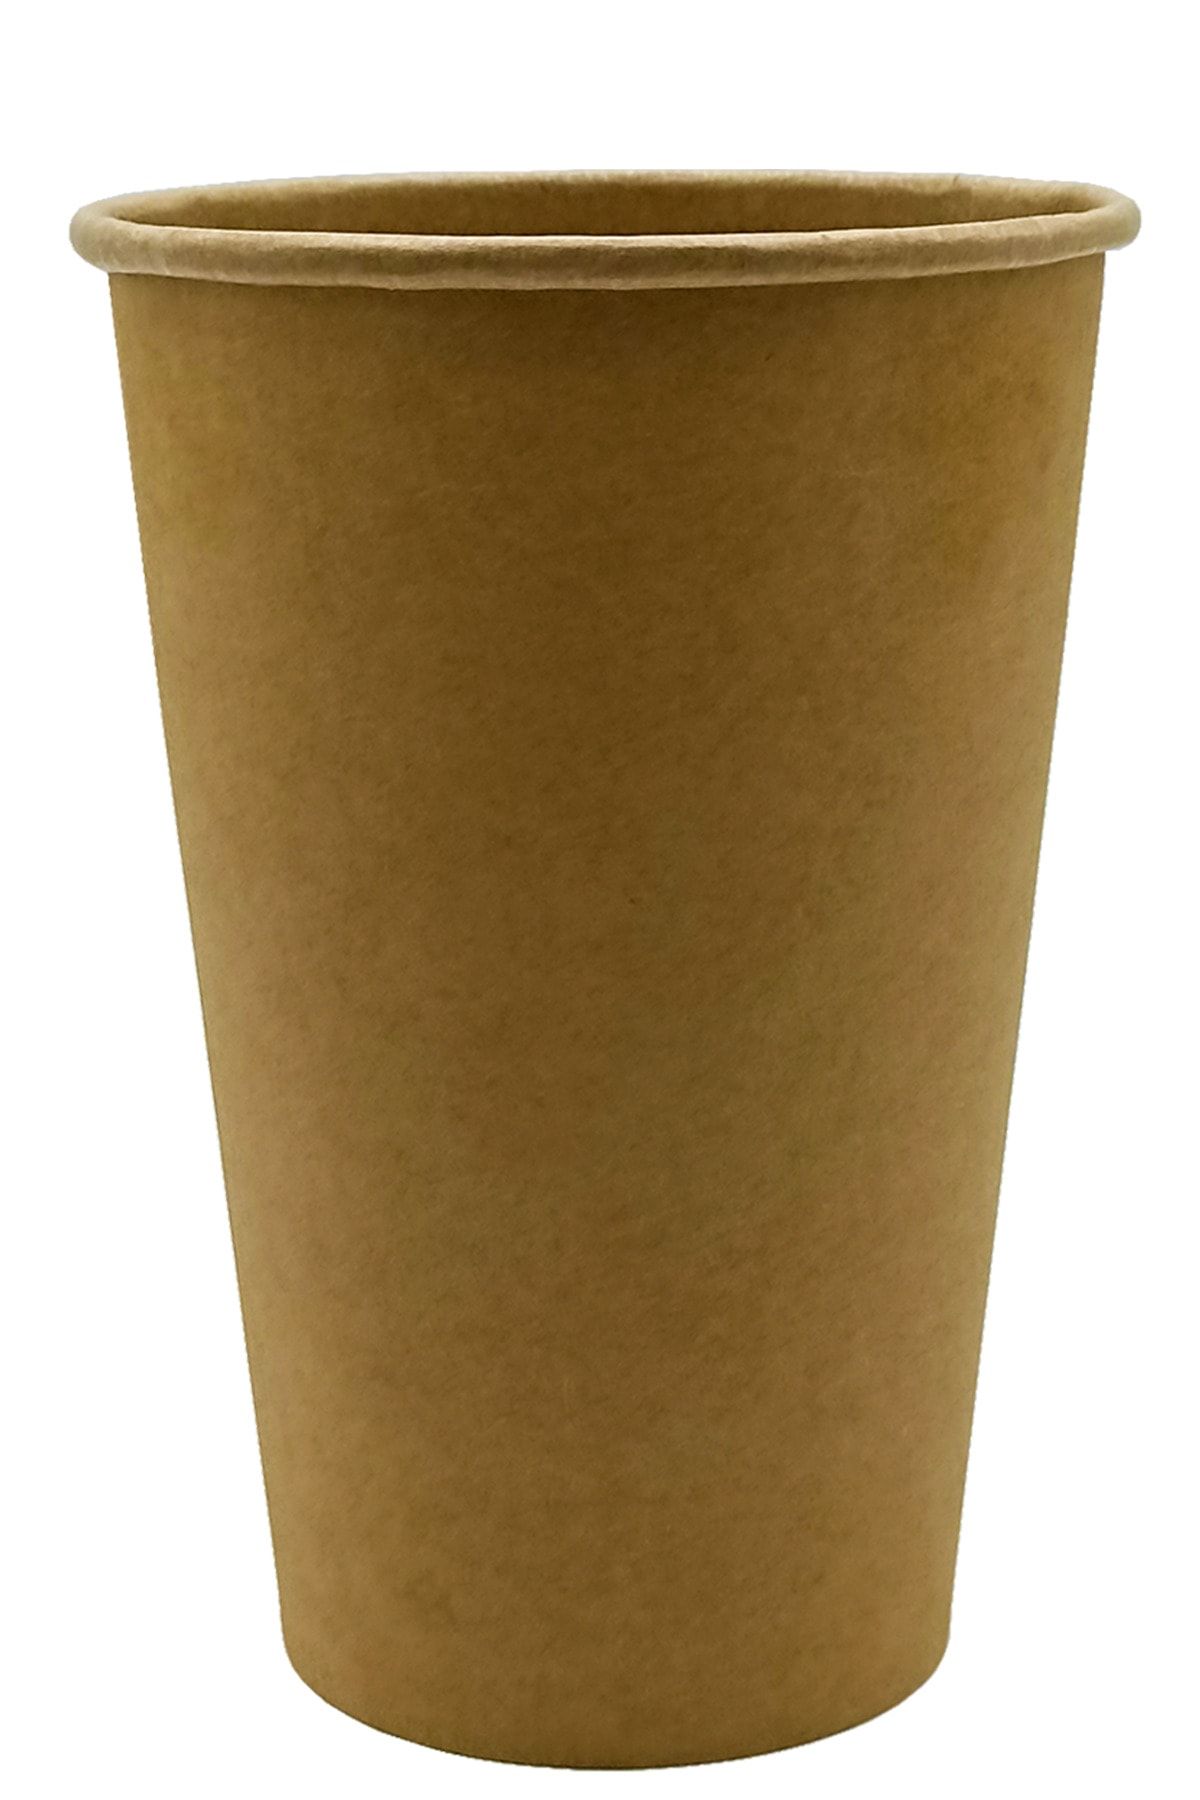 Afra Tedarik 16 Oz Karton Bardak Latte Cappuccino Kraft Kağıt Bardak 480 ml - 50'li